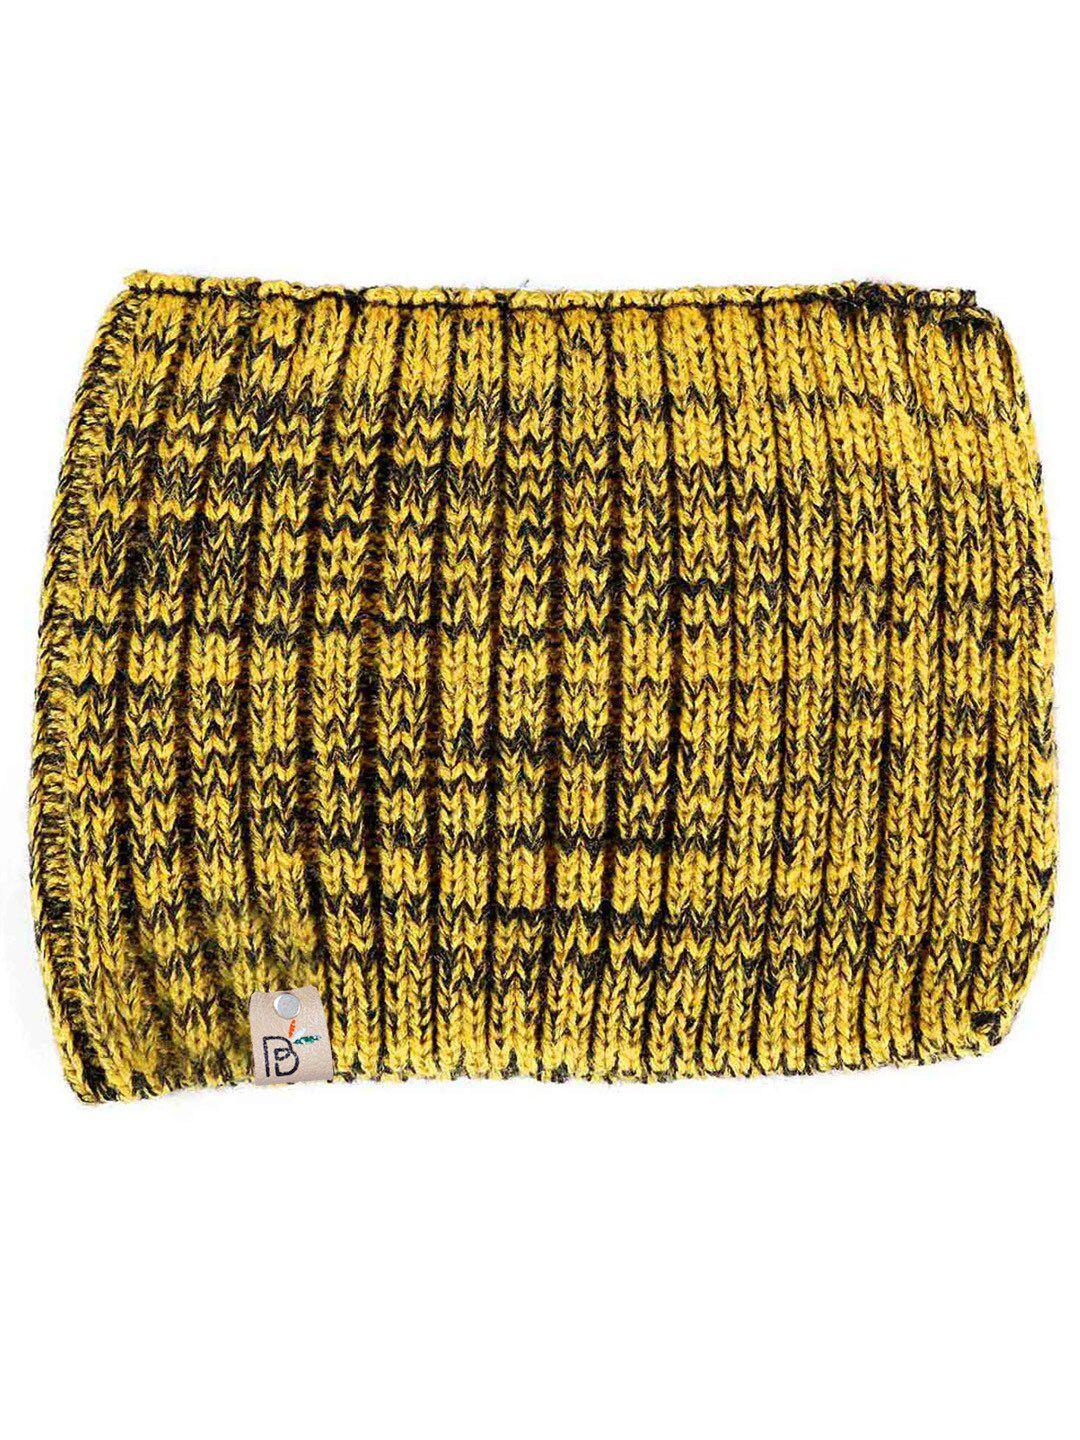 bharatasya men yellow & black woolen headband